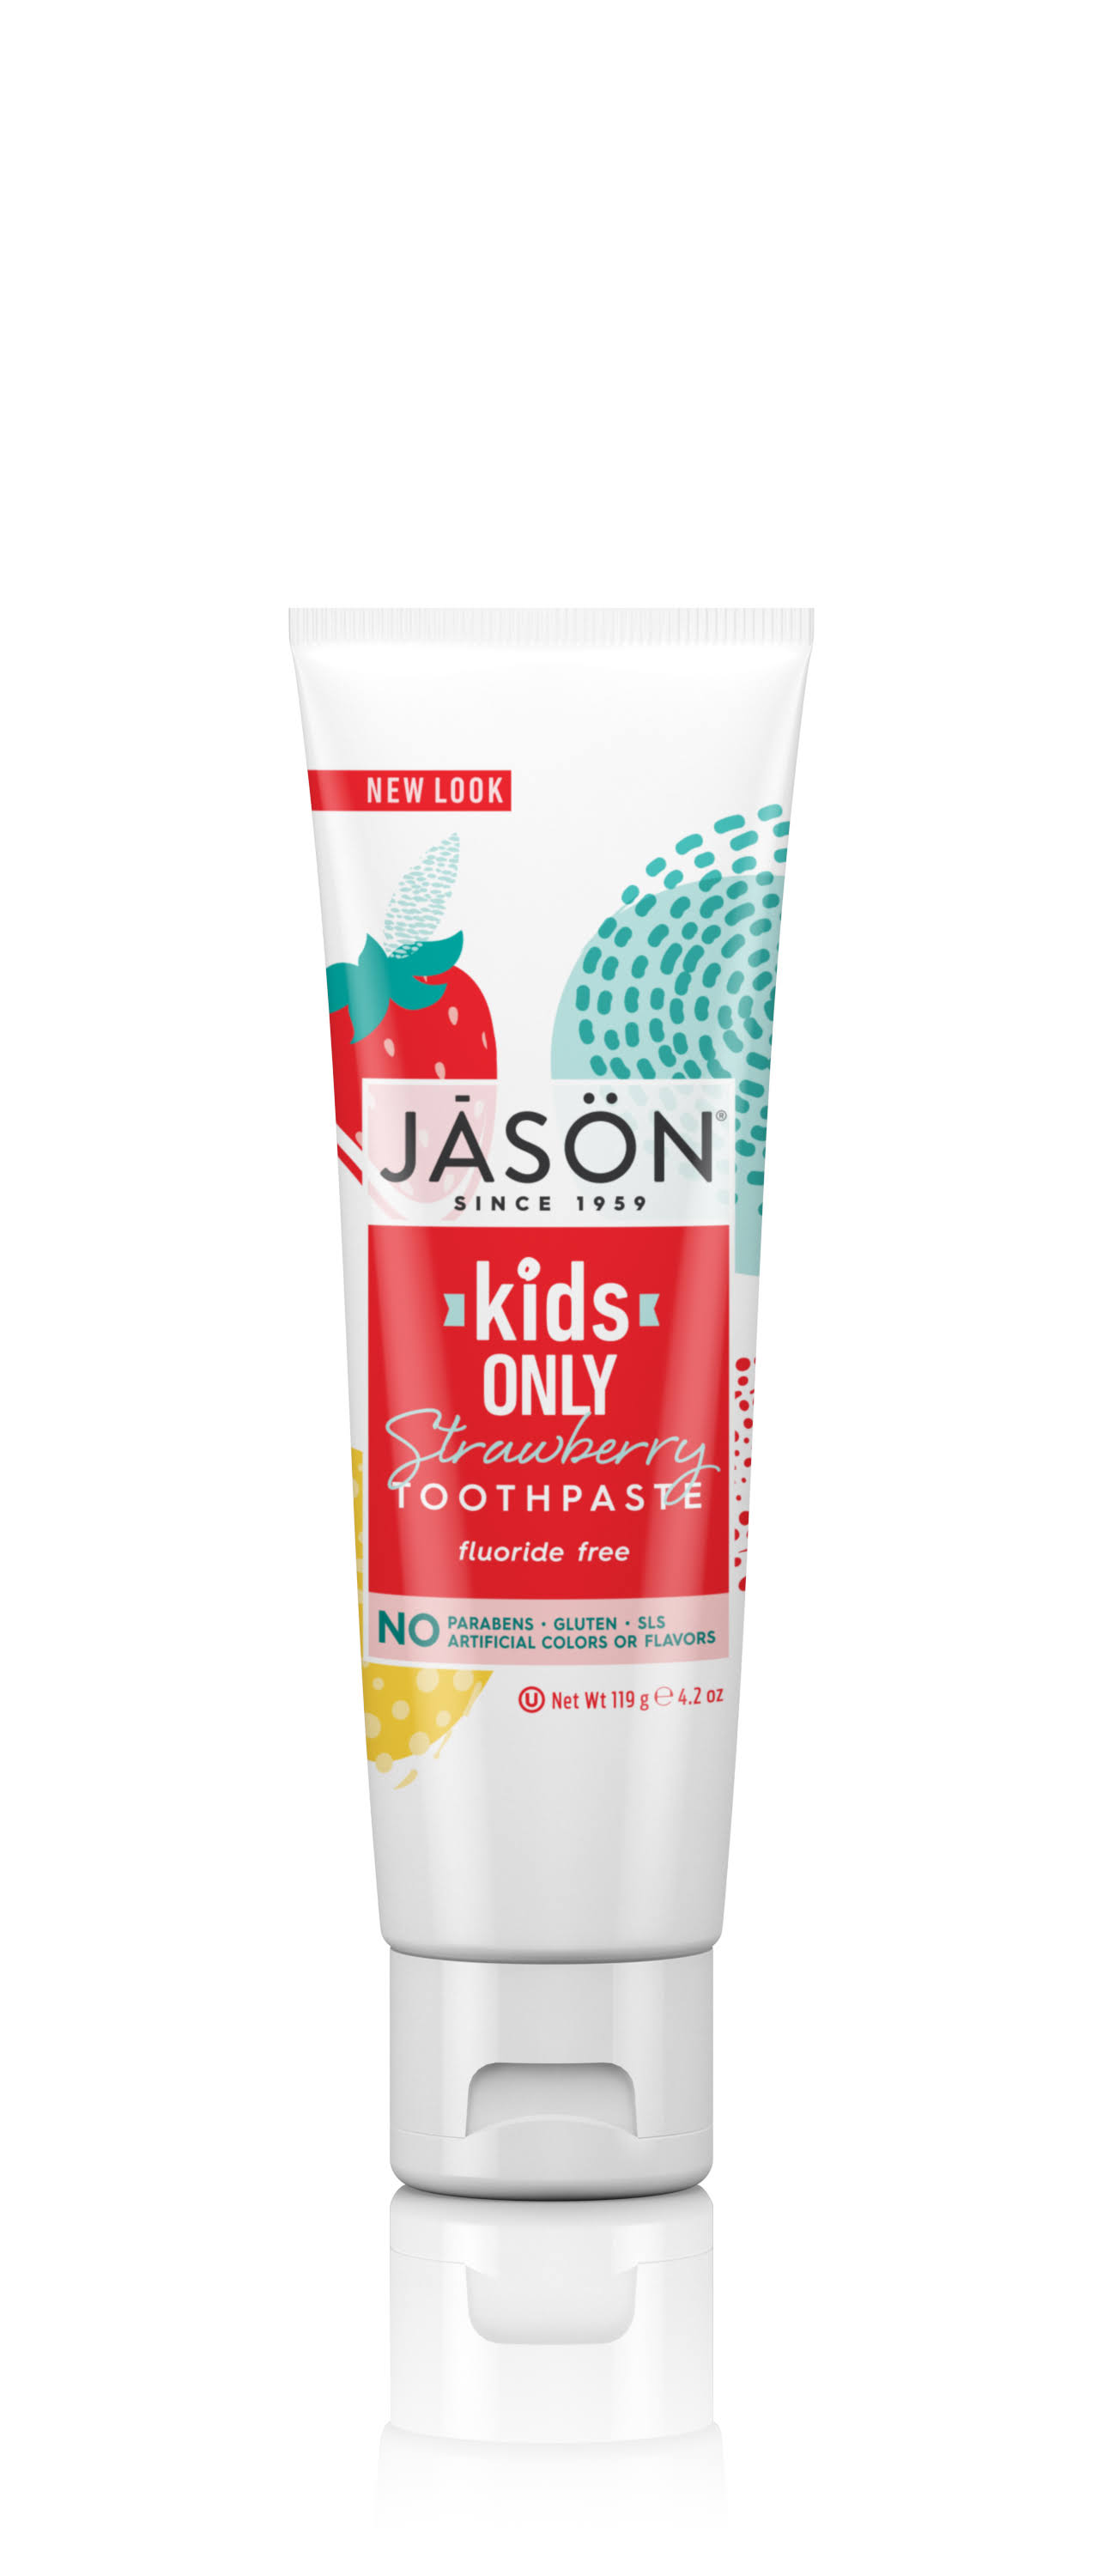 Jason Kids Only Toothpaste - Strawberry, 4.2oz